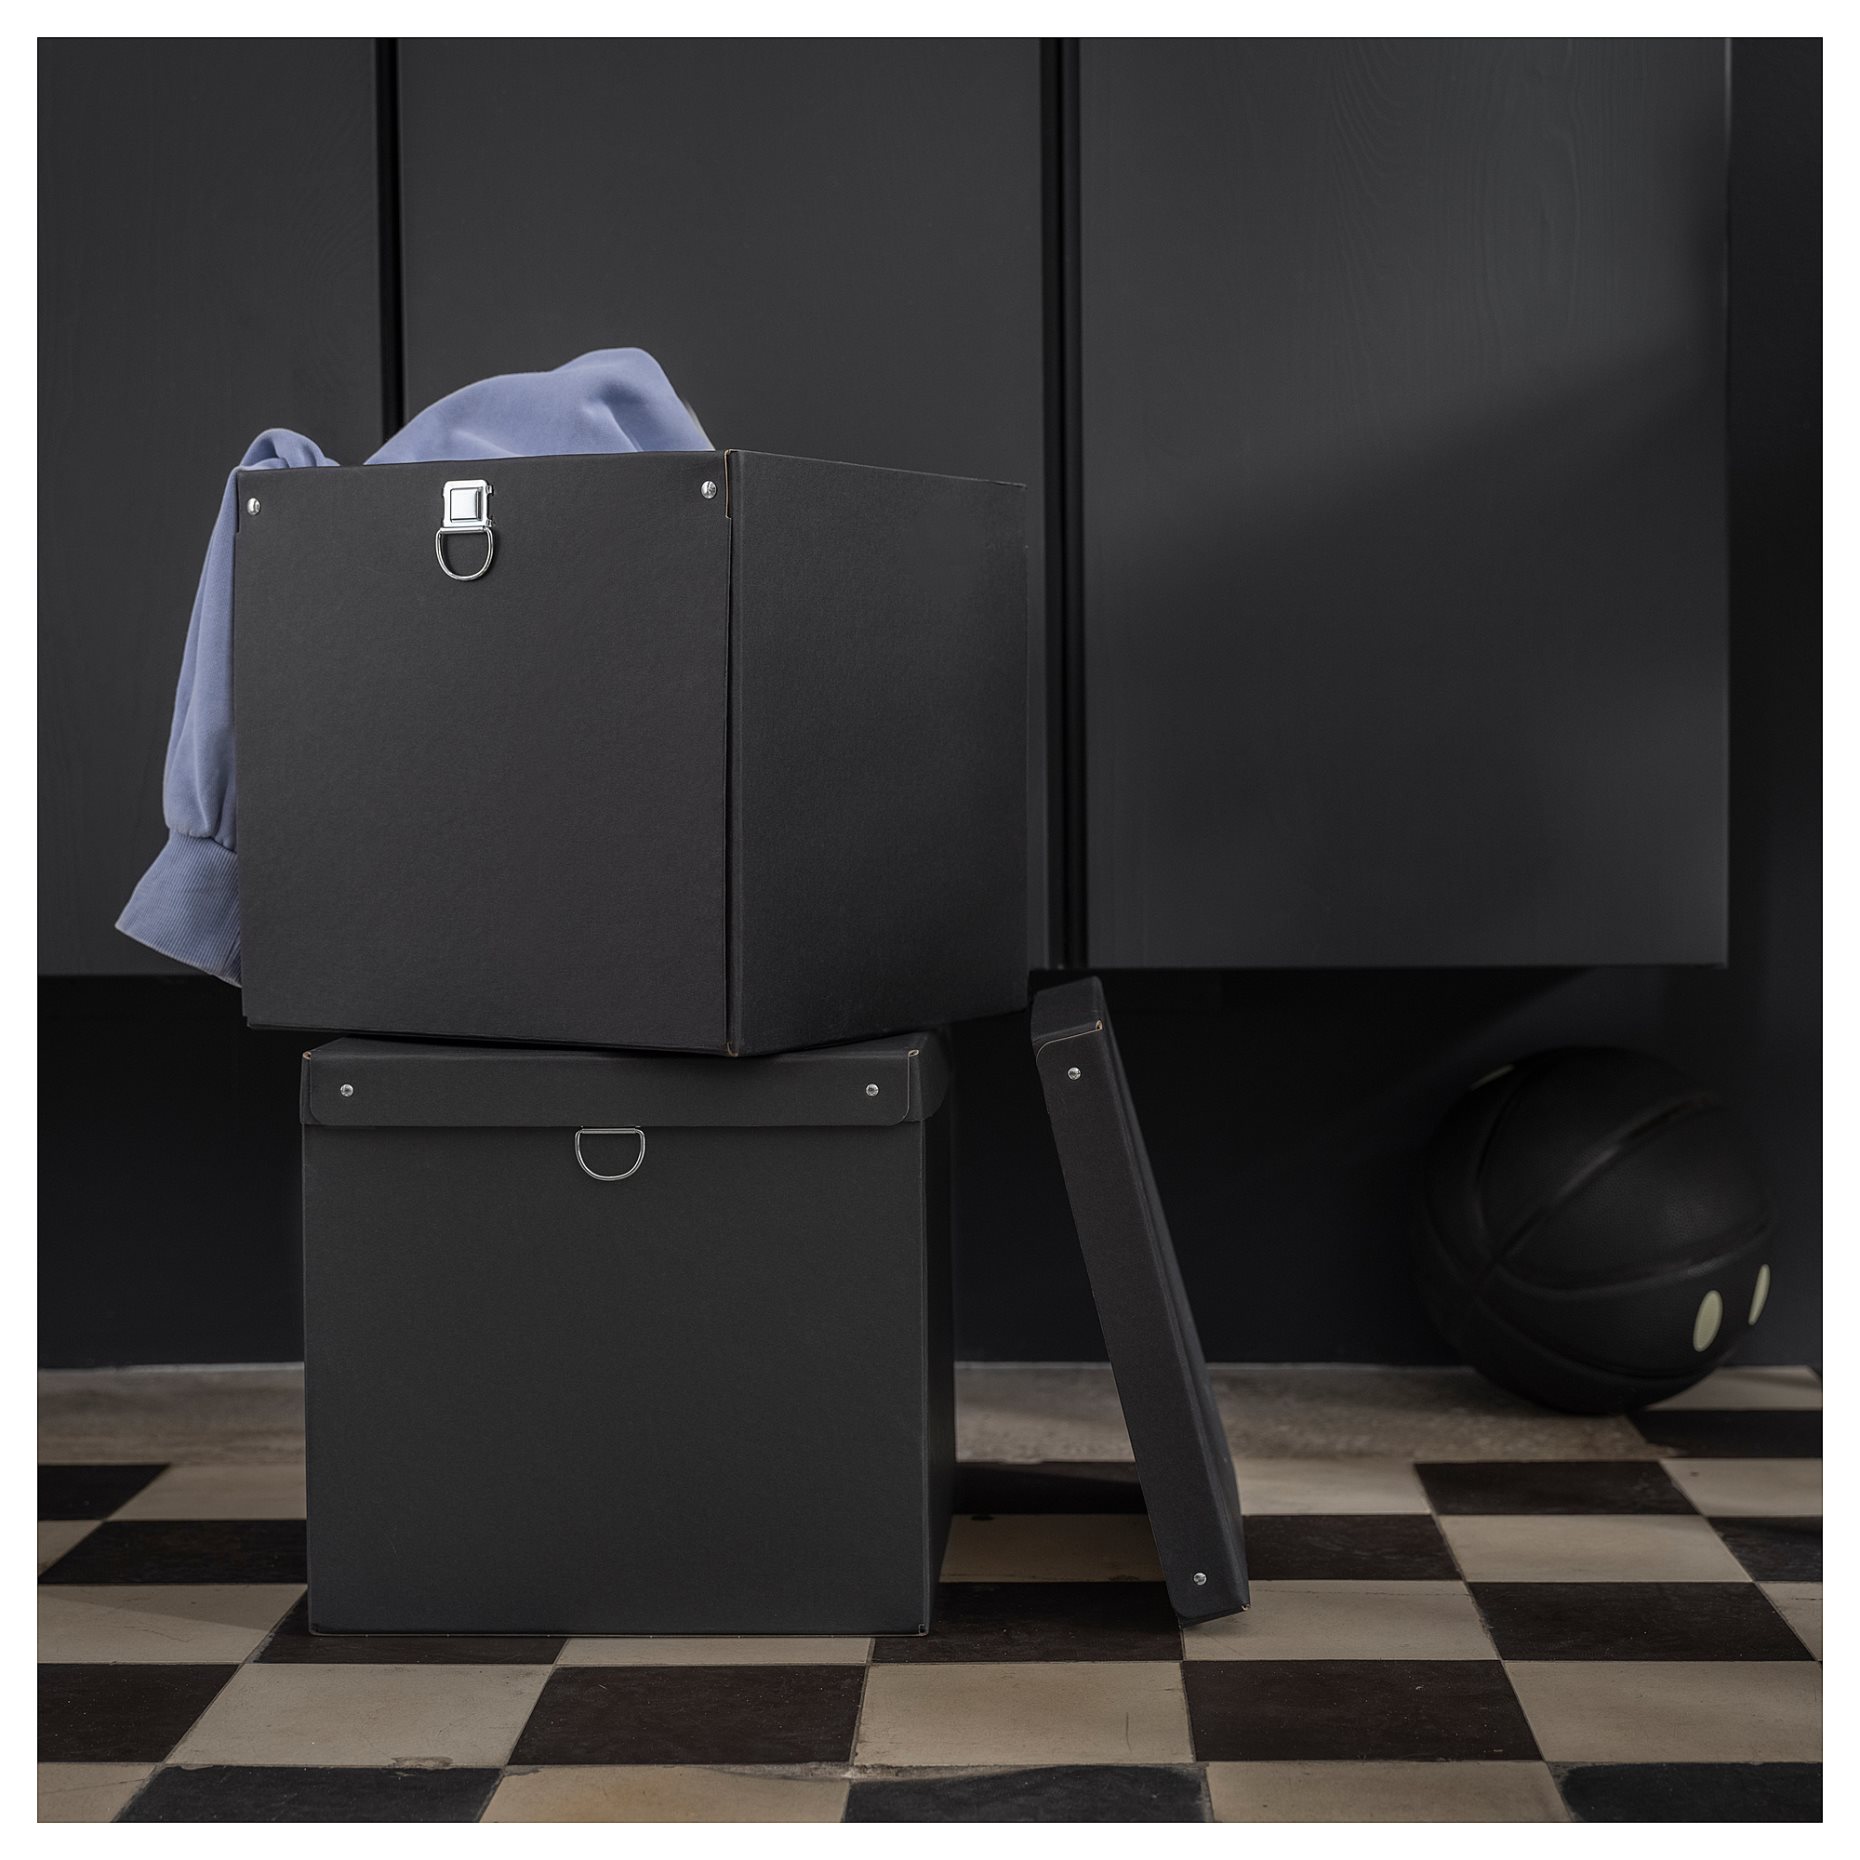 NIMM, κουτί αποθήκευσης με καπάκι, 32x30x30 cm, 405.181.66